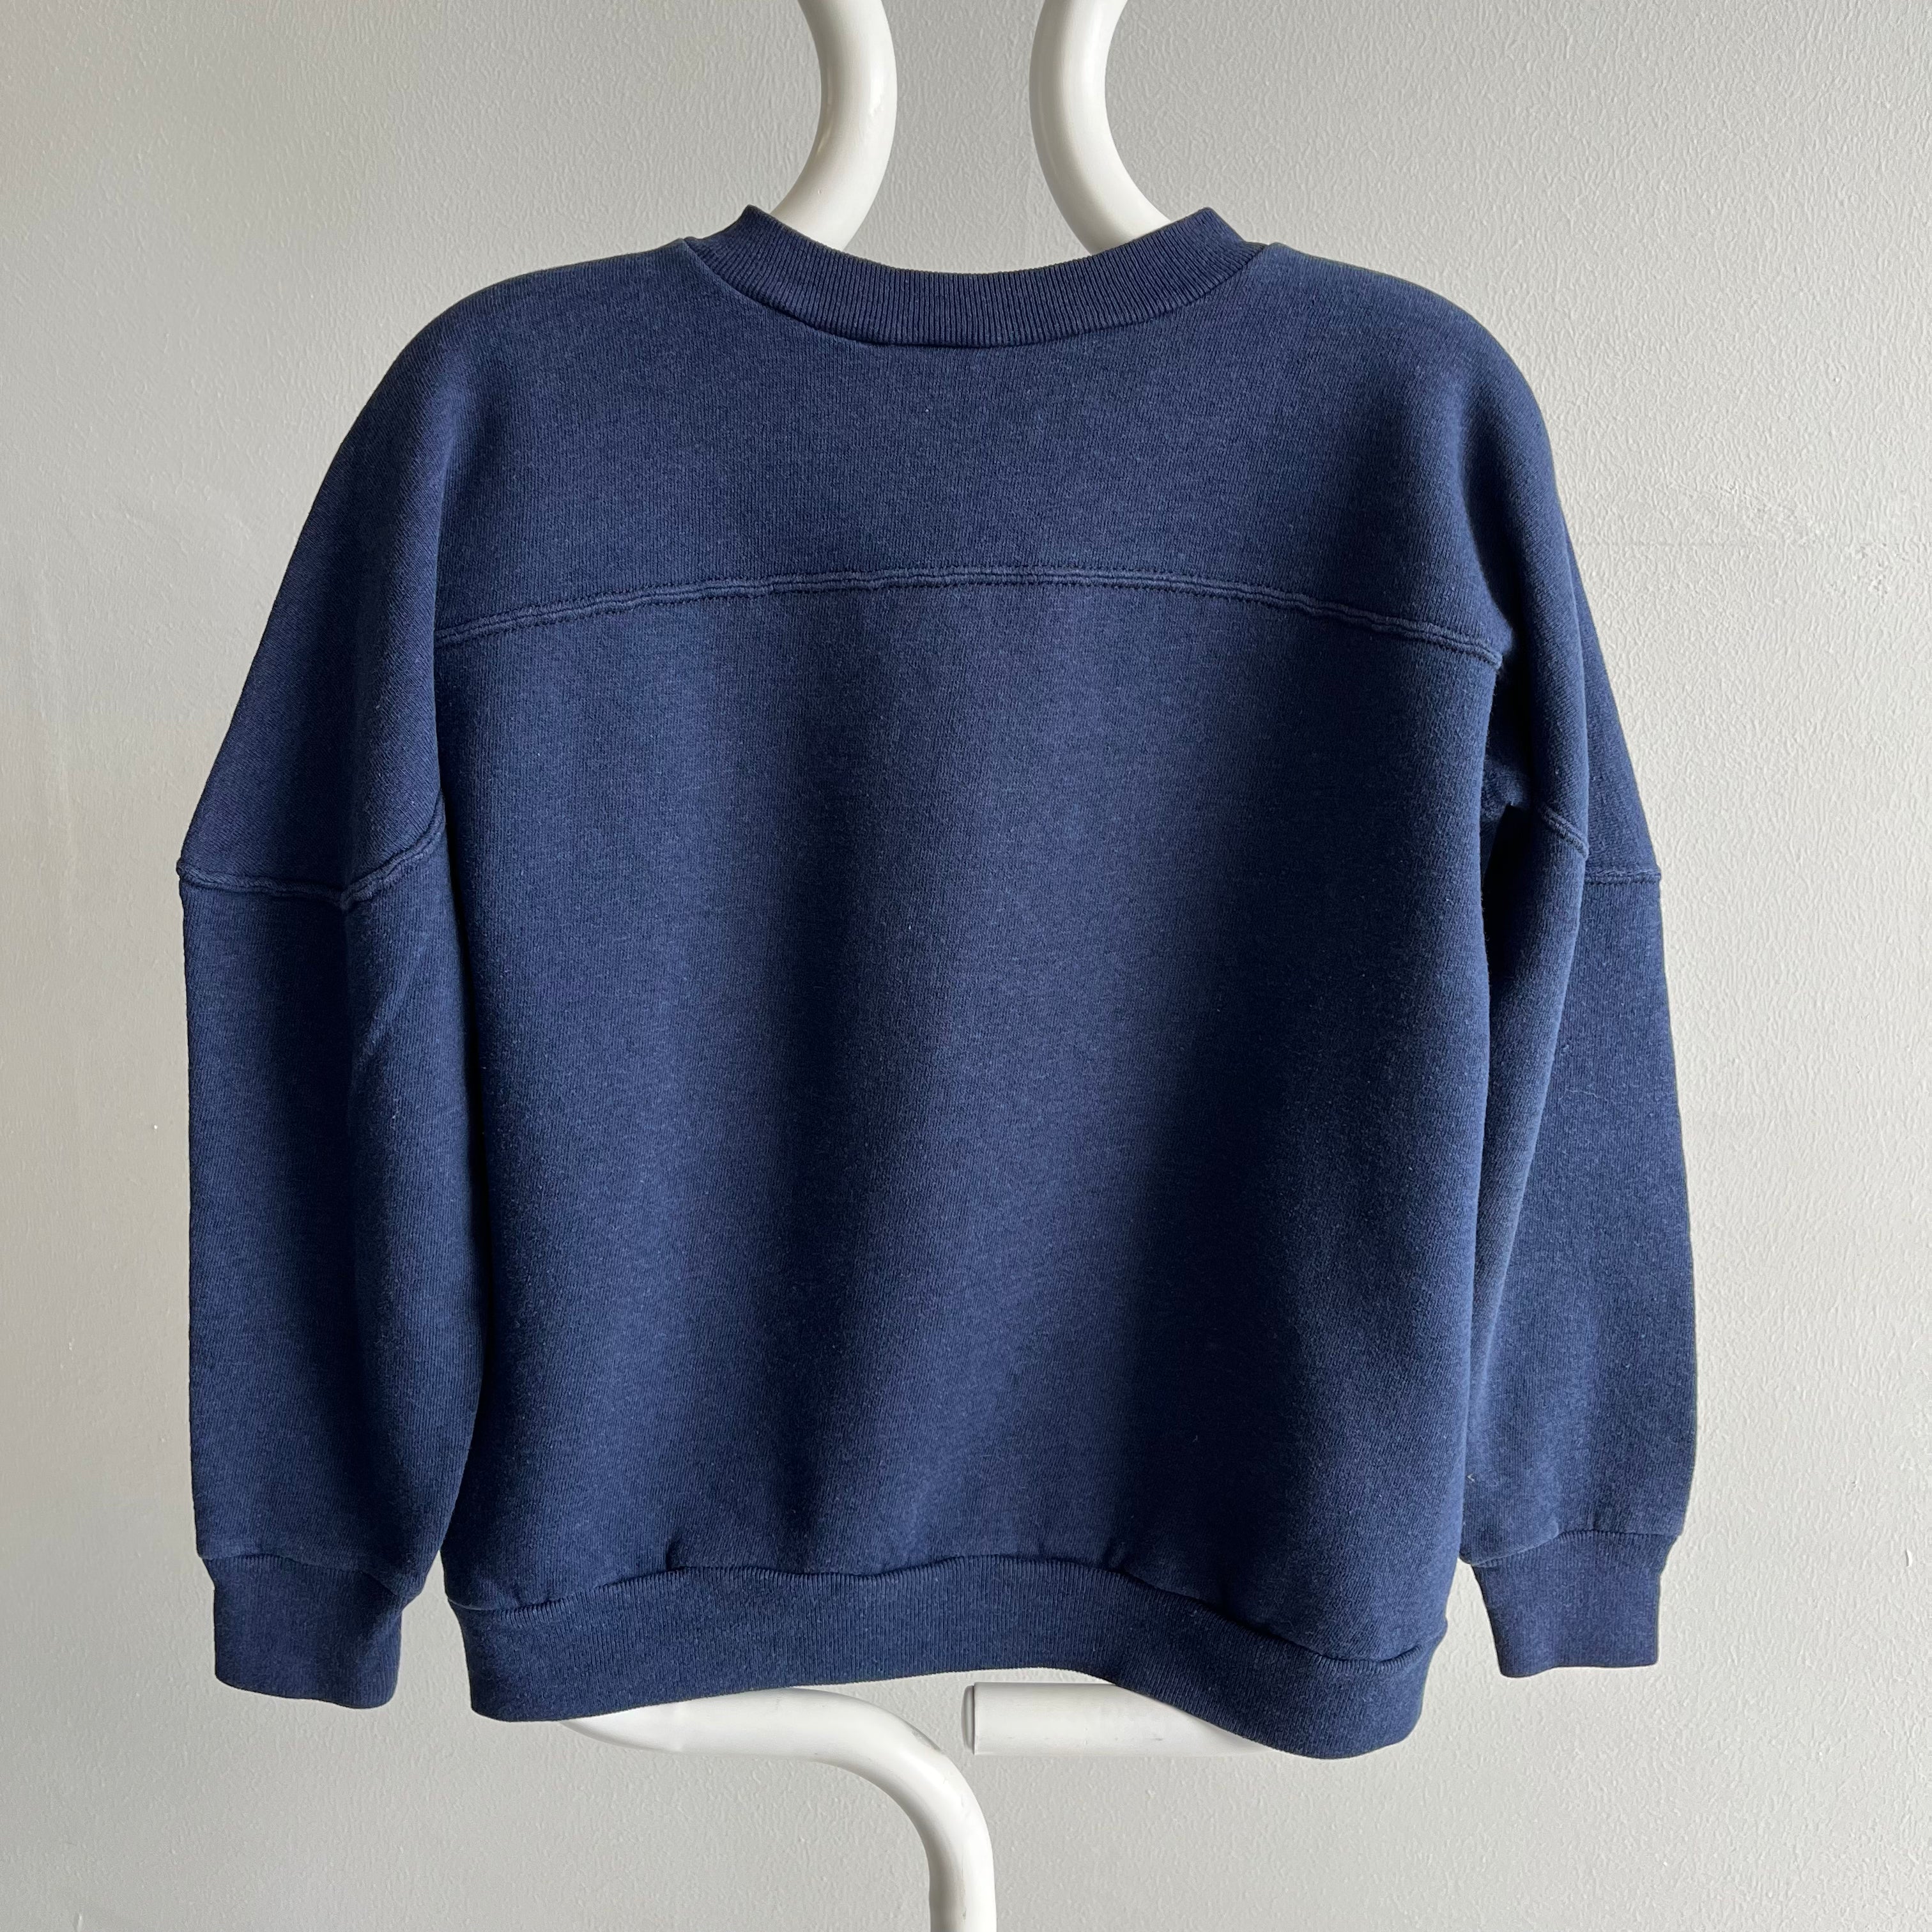 1980s Unusual Blank Navy Sweatshirt - Timelessly Cool